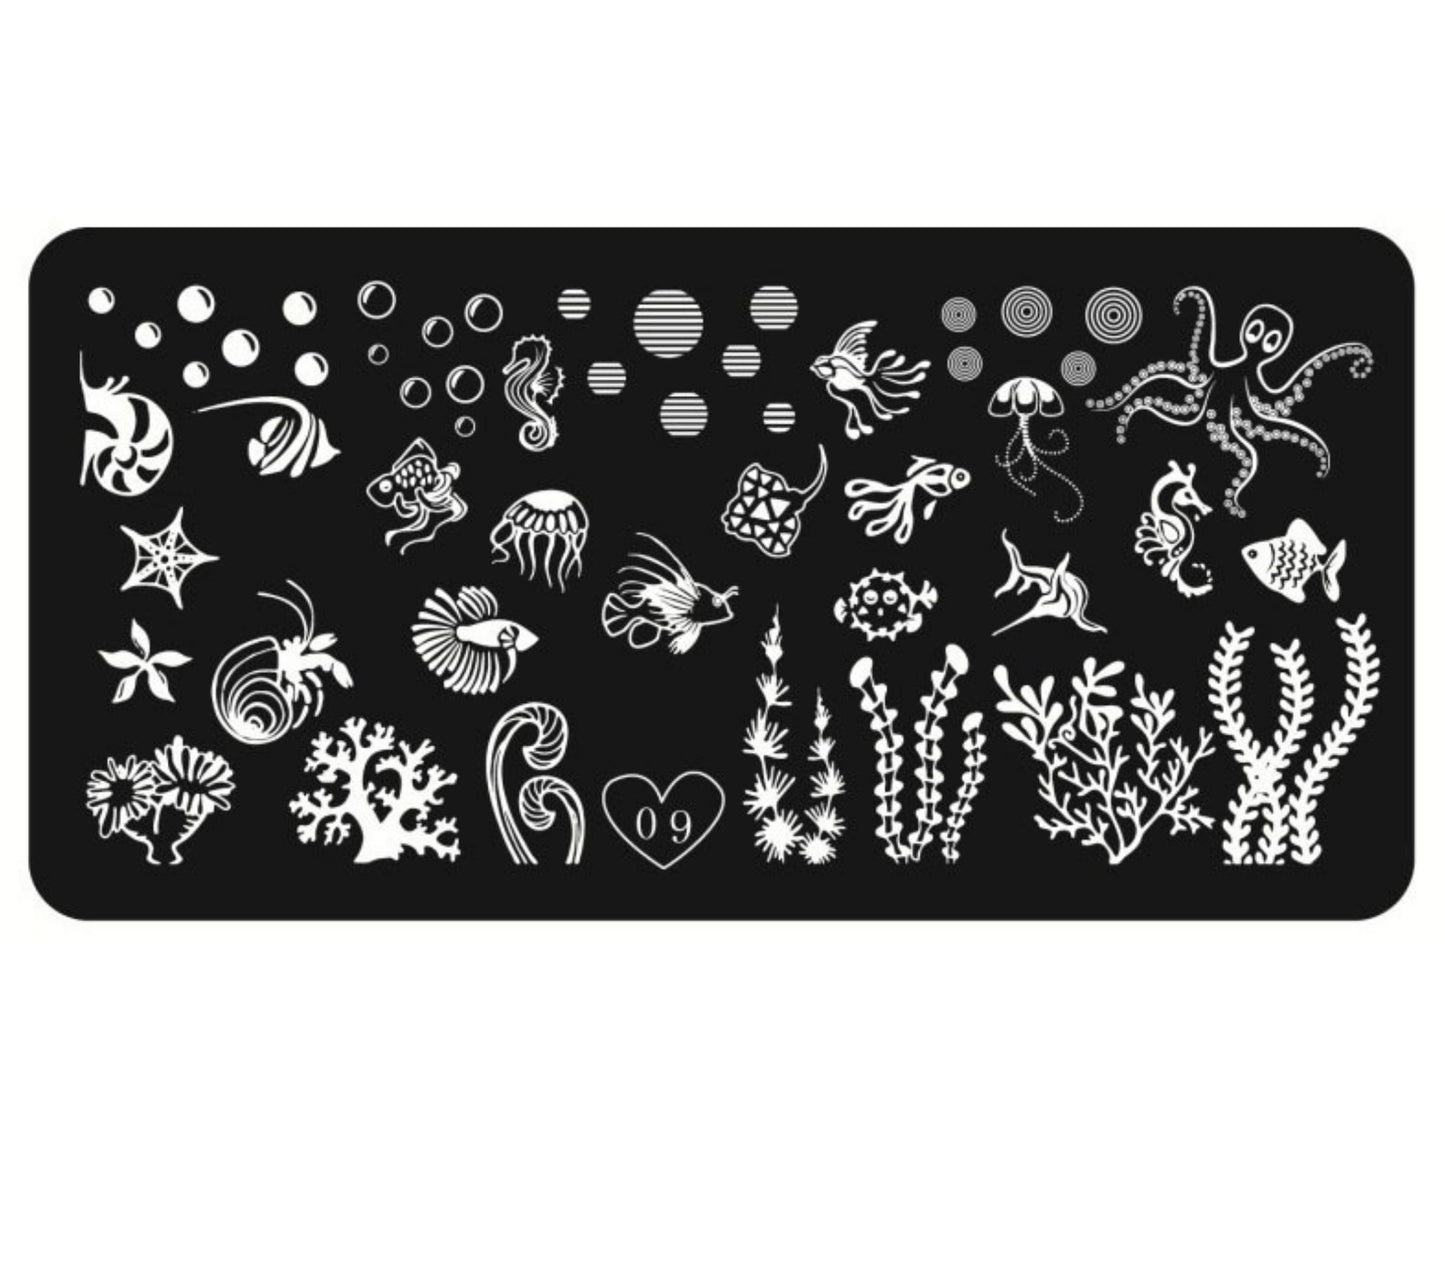 Ocean theme and ginger house Nail Art Stamping Image Plates/ Christmas Stamping Image Plates Manicure Nail Designs DIY